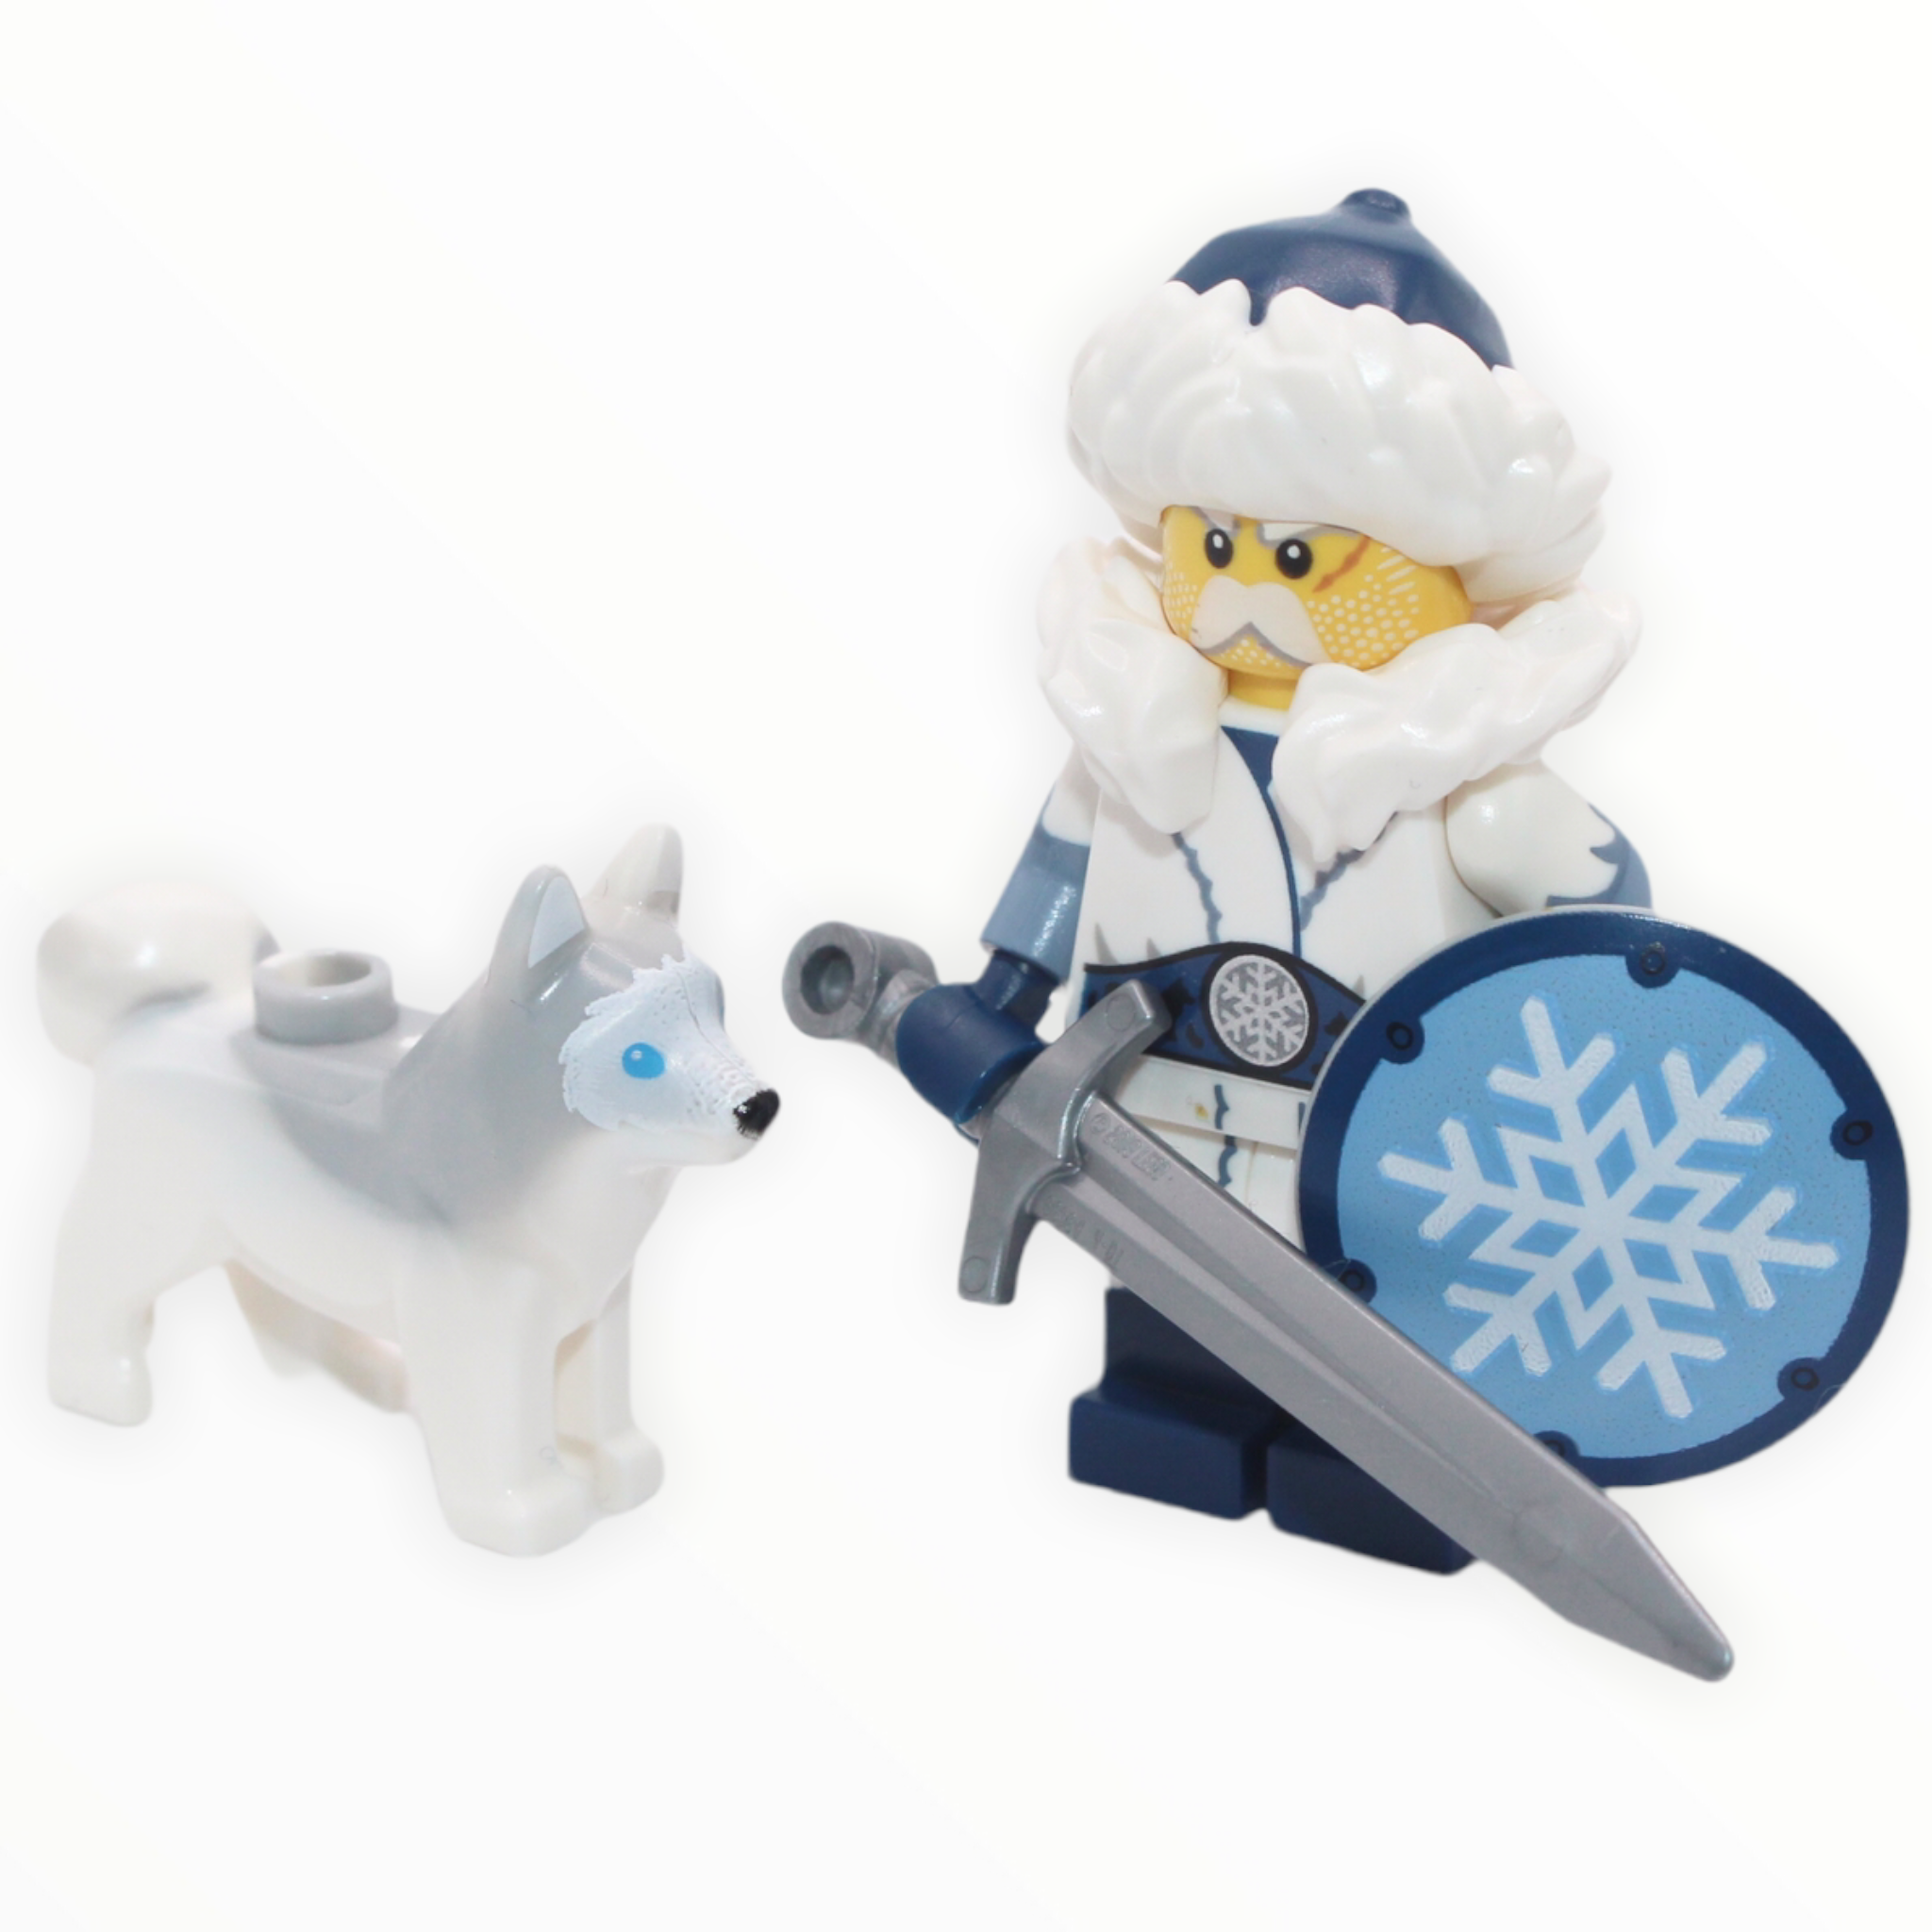 LEGO Series 22: Snow Guardian